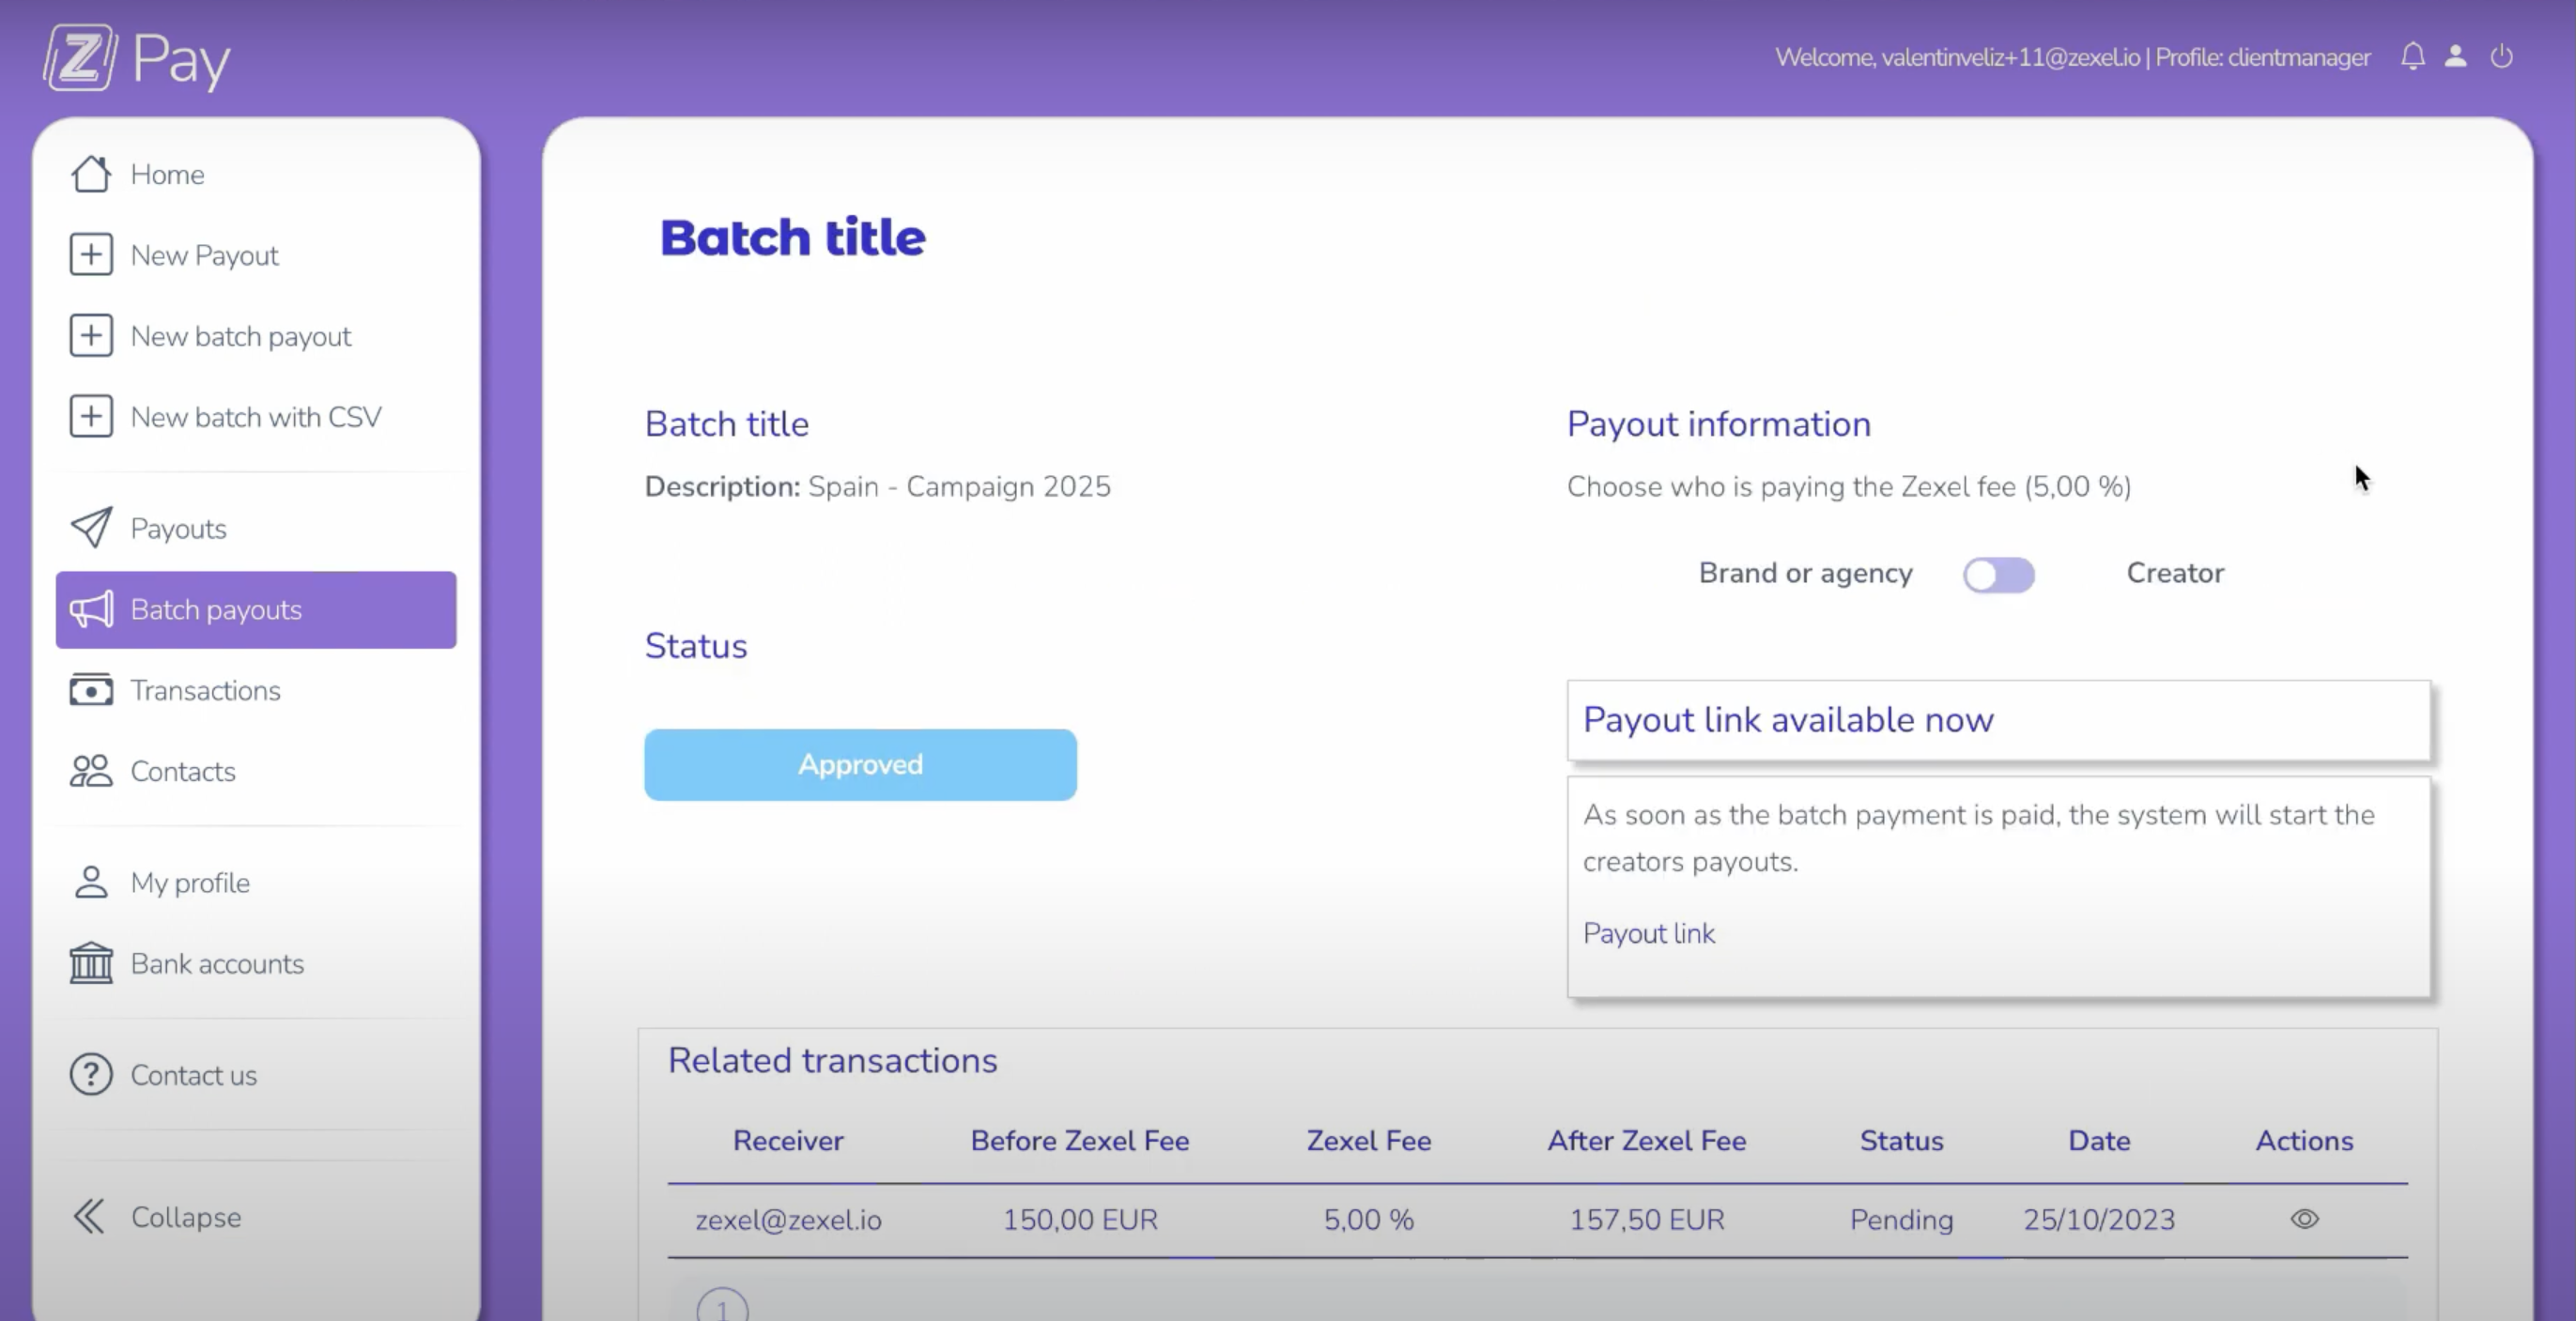 Zexel Pay: Batch detail information